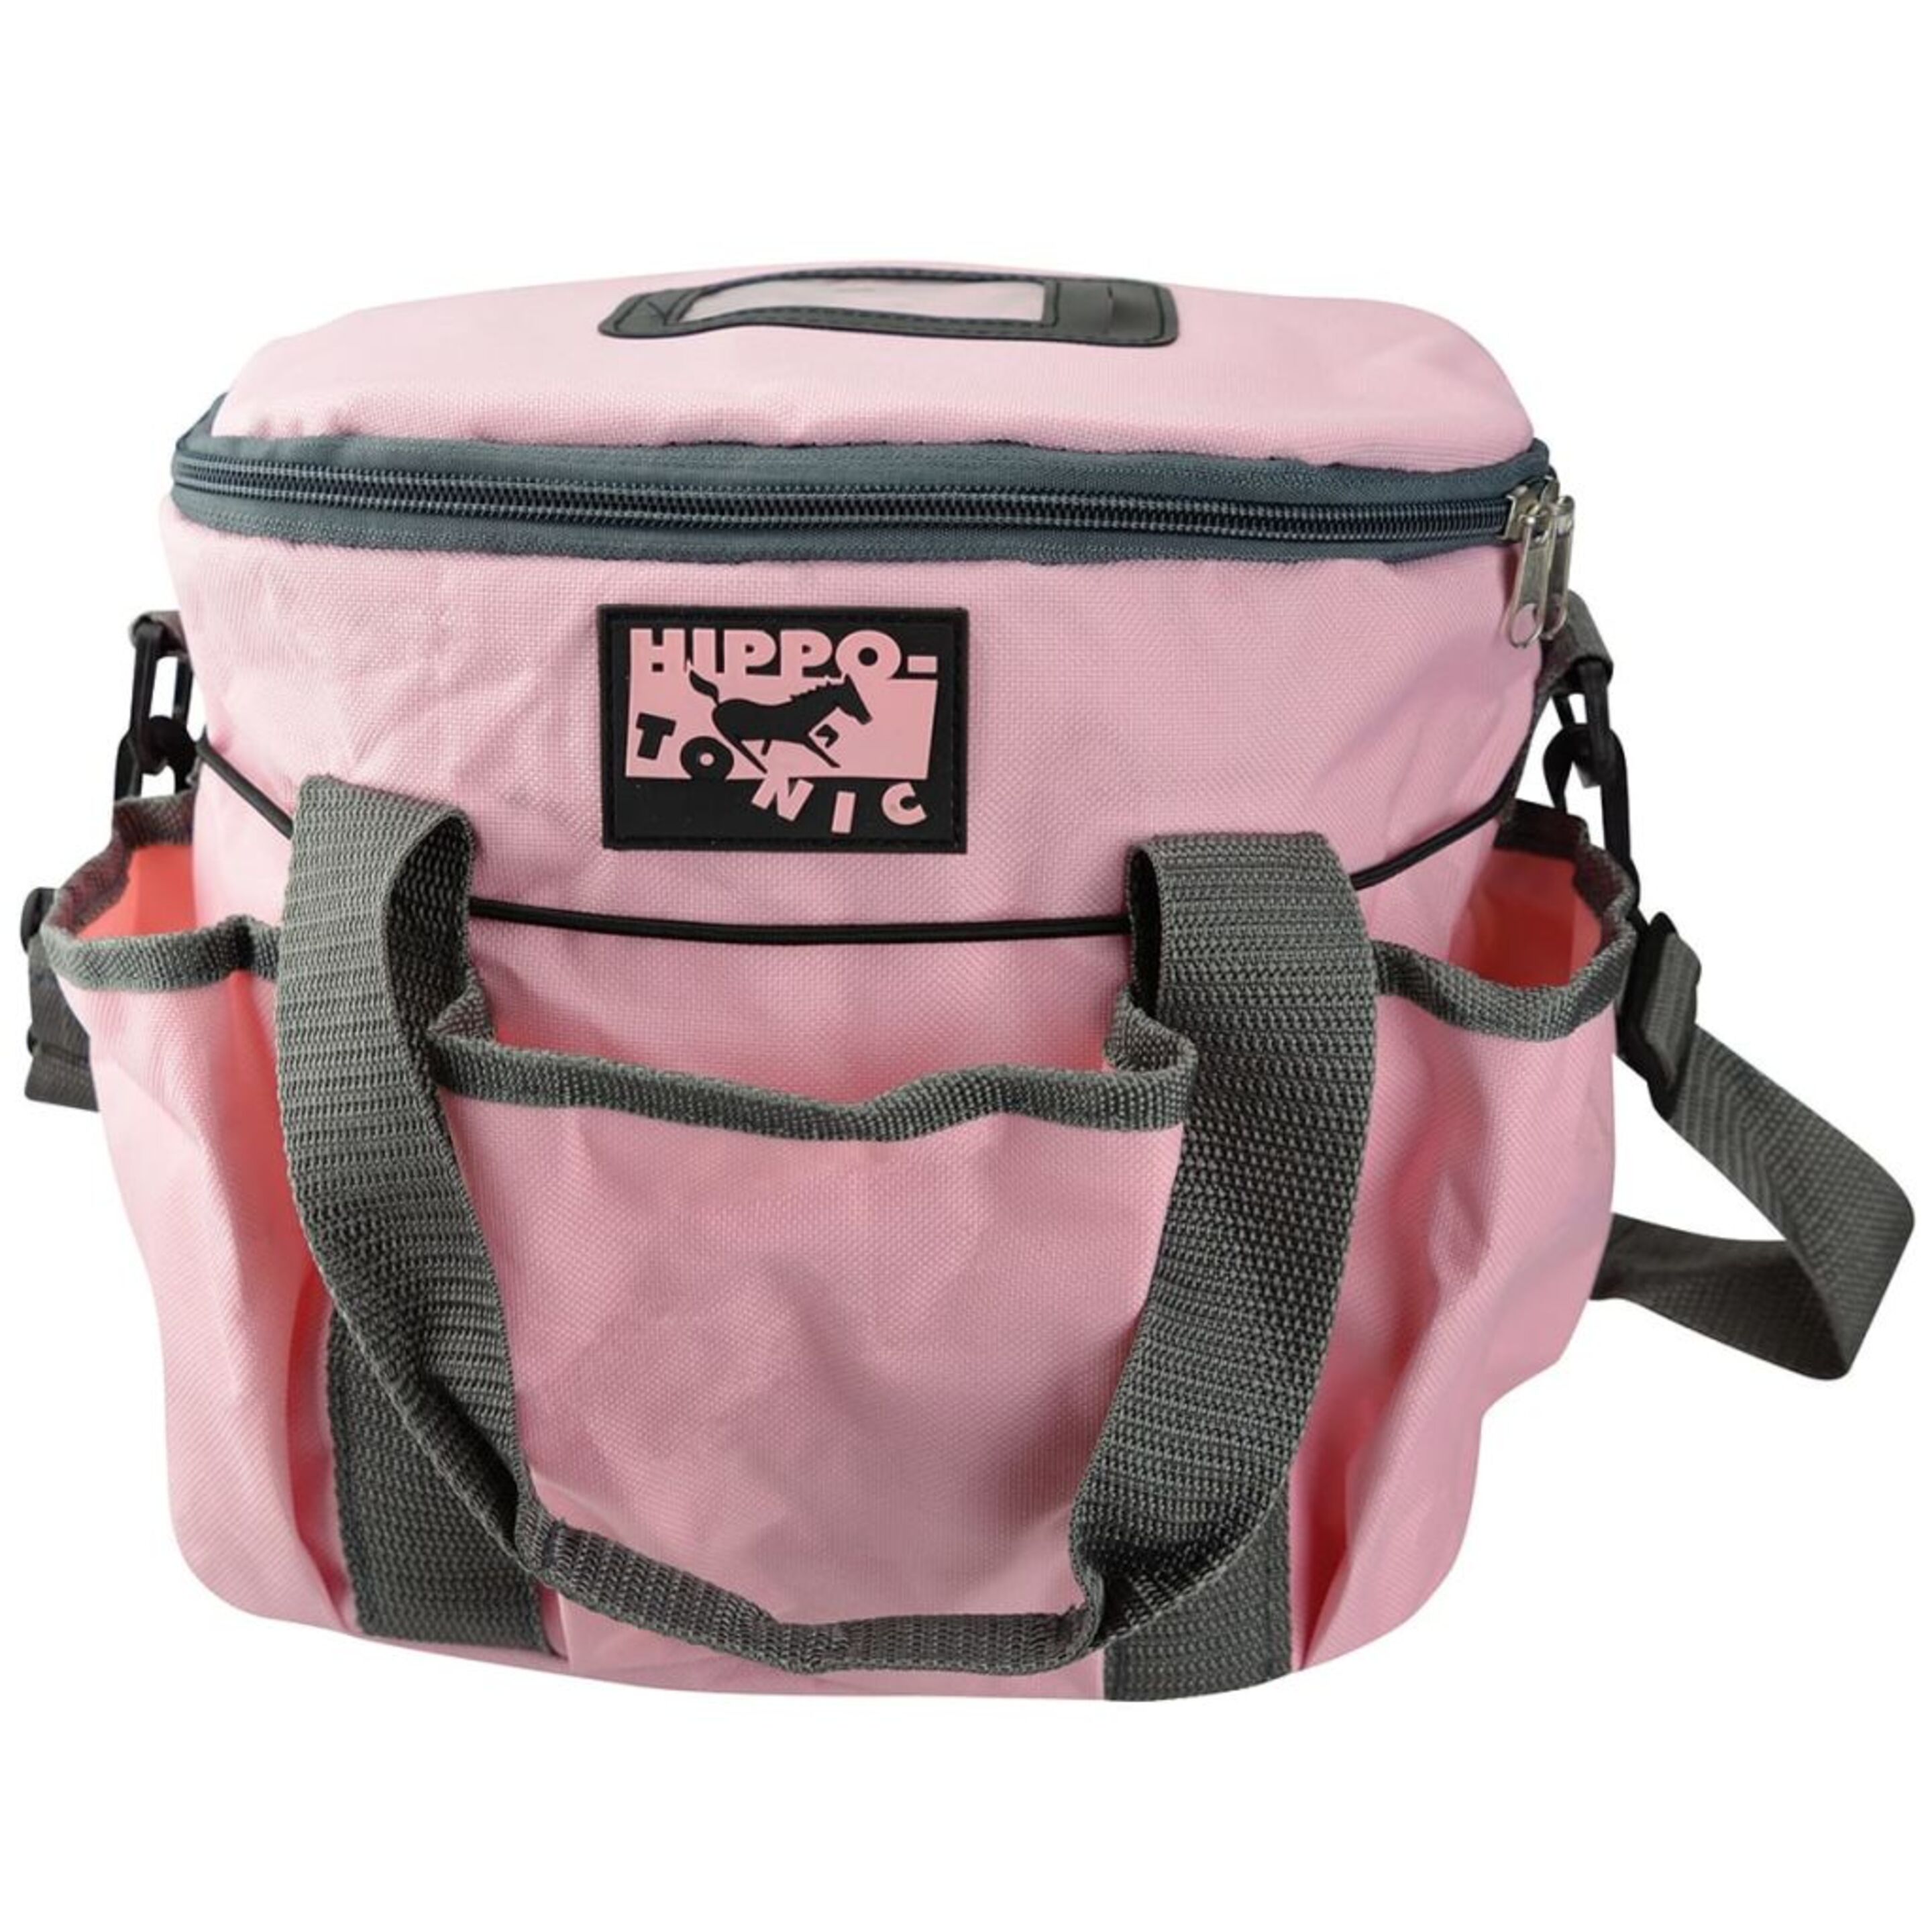 Hippo-tonic Bolsa De Aseo Para Caballos Pro 3 Rosa 700196013 - rosa - 